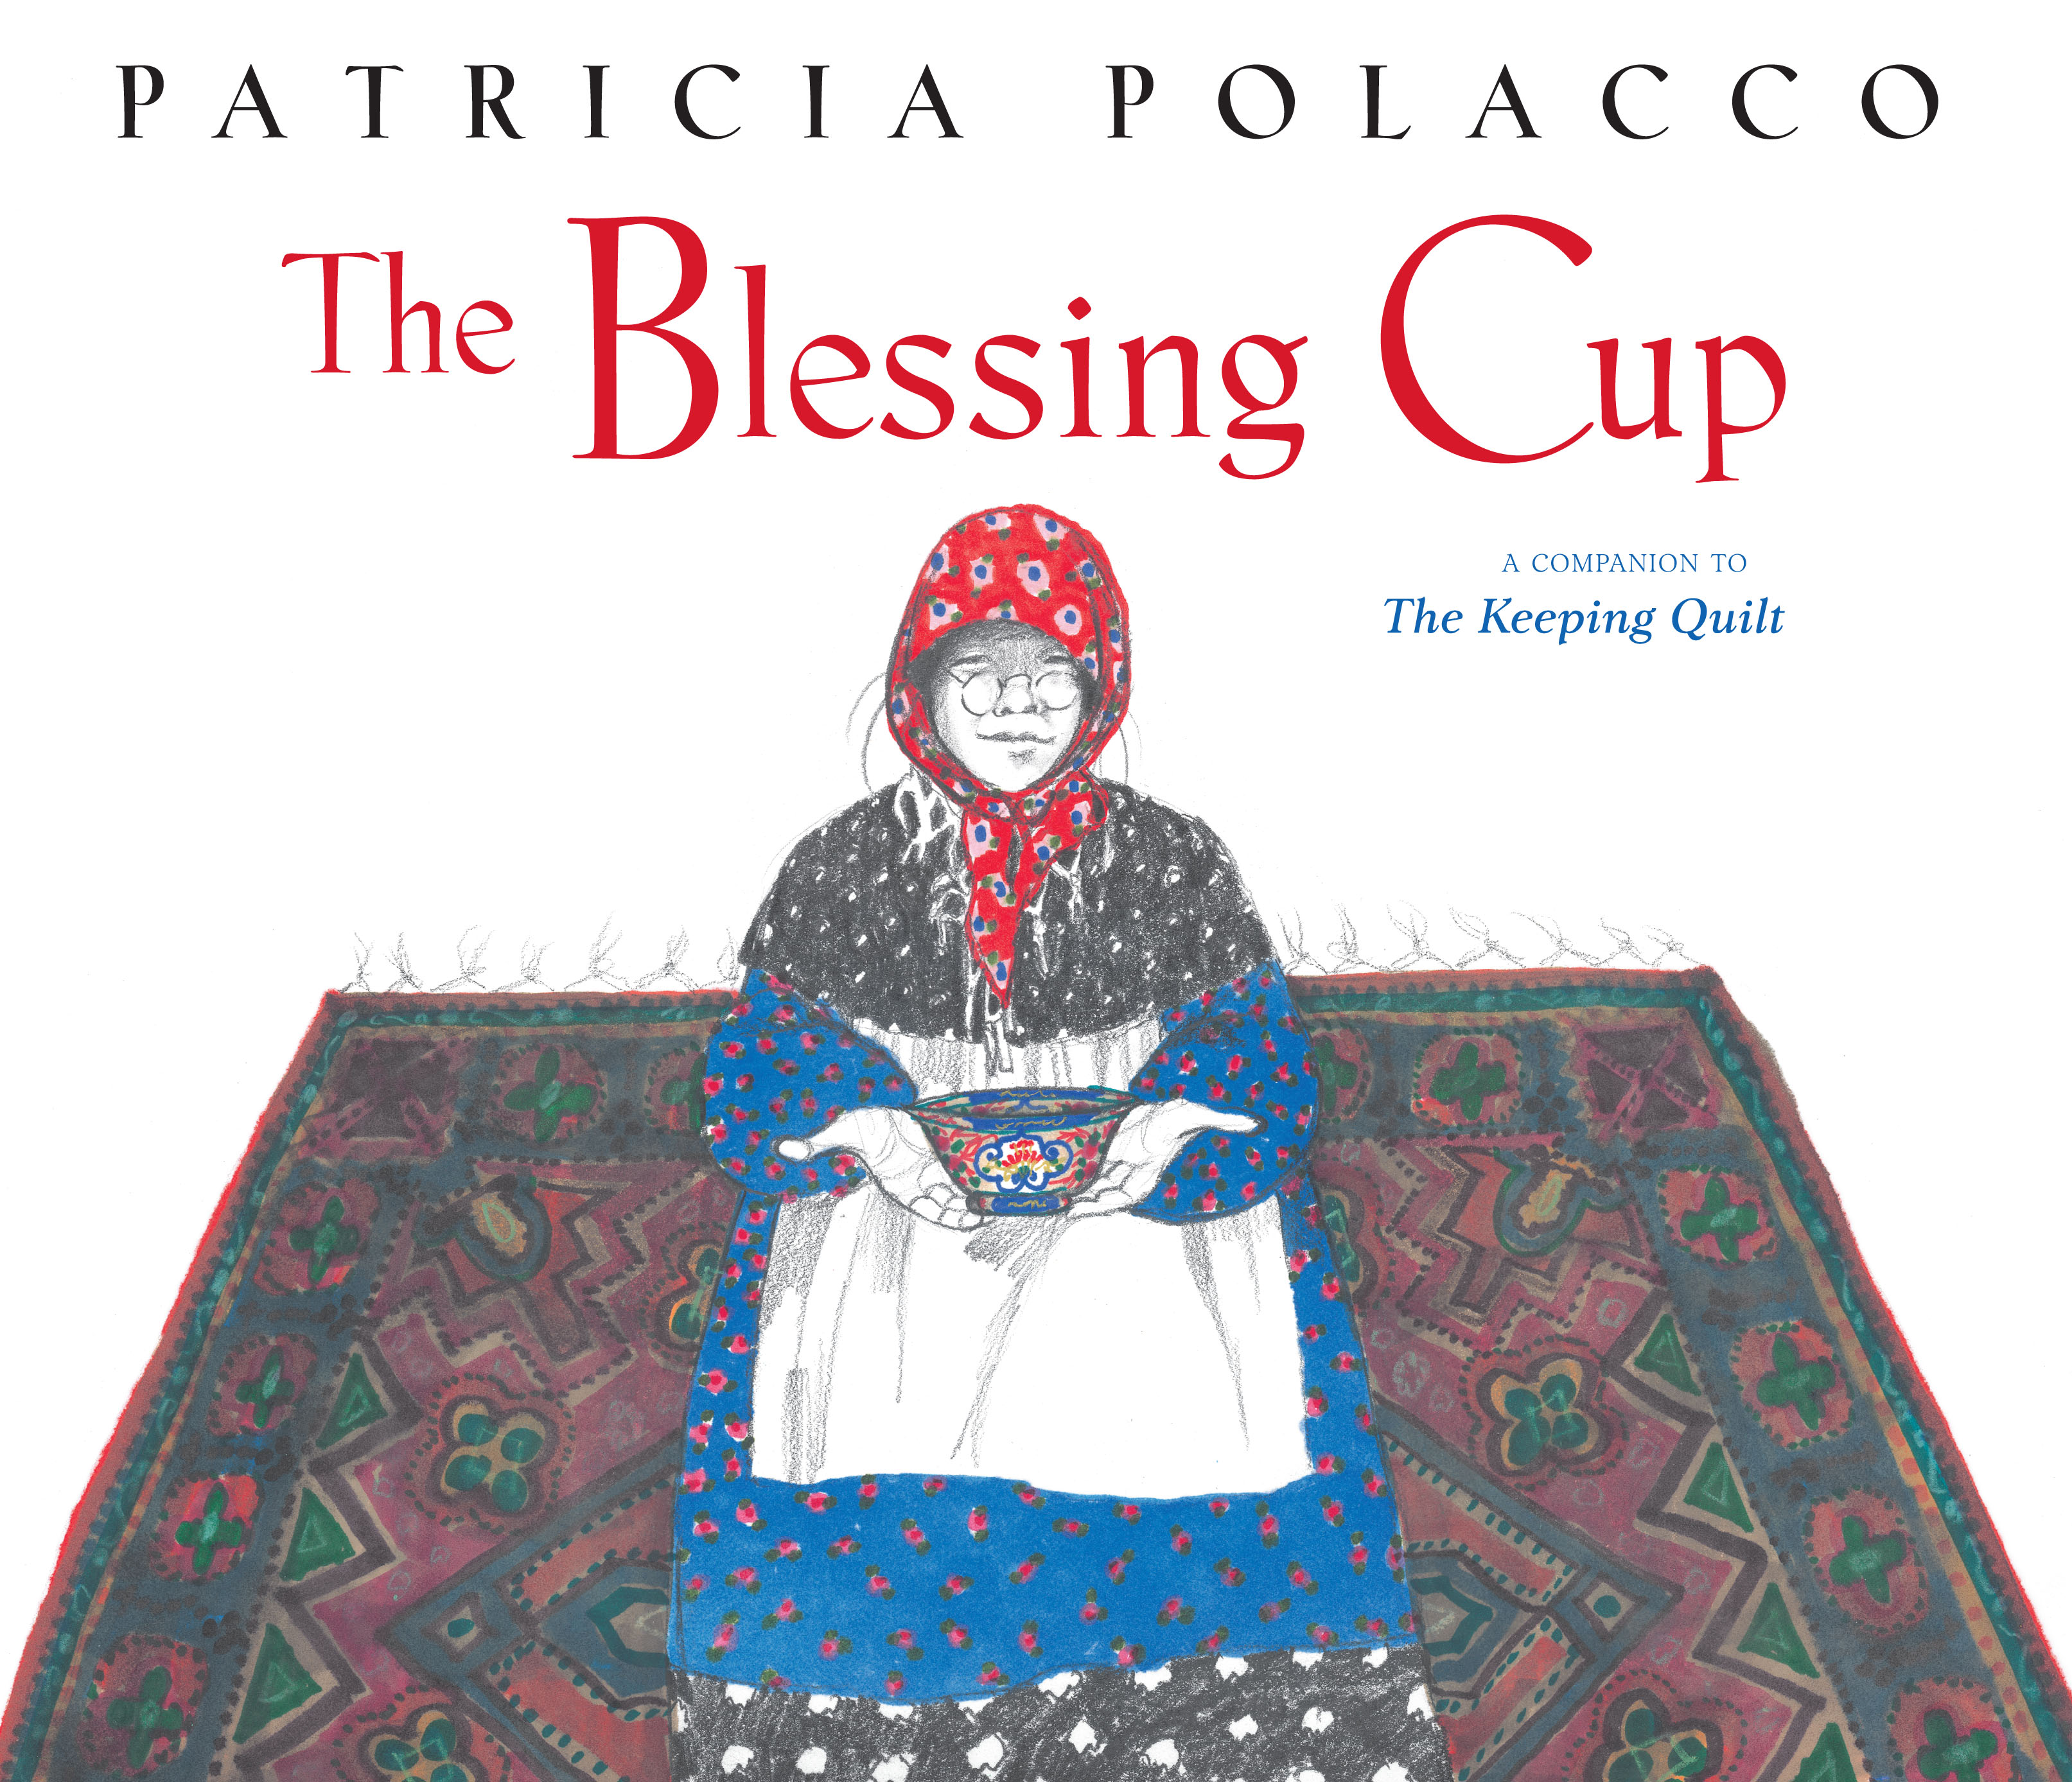 Children's author Patricia Polacco visits SLCL